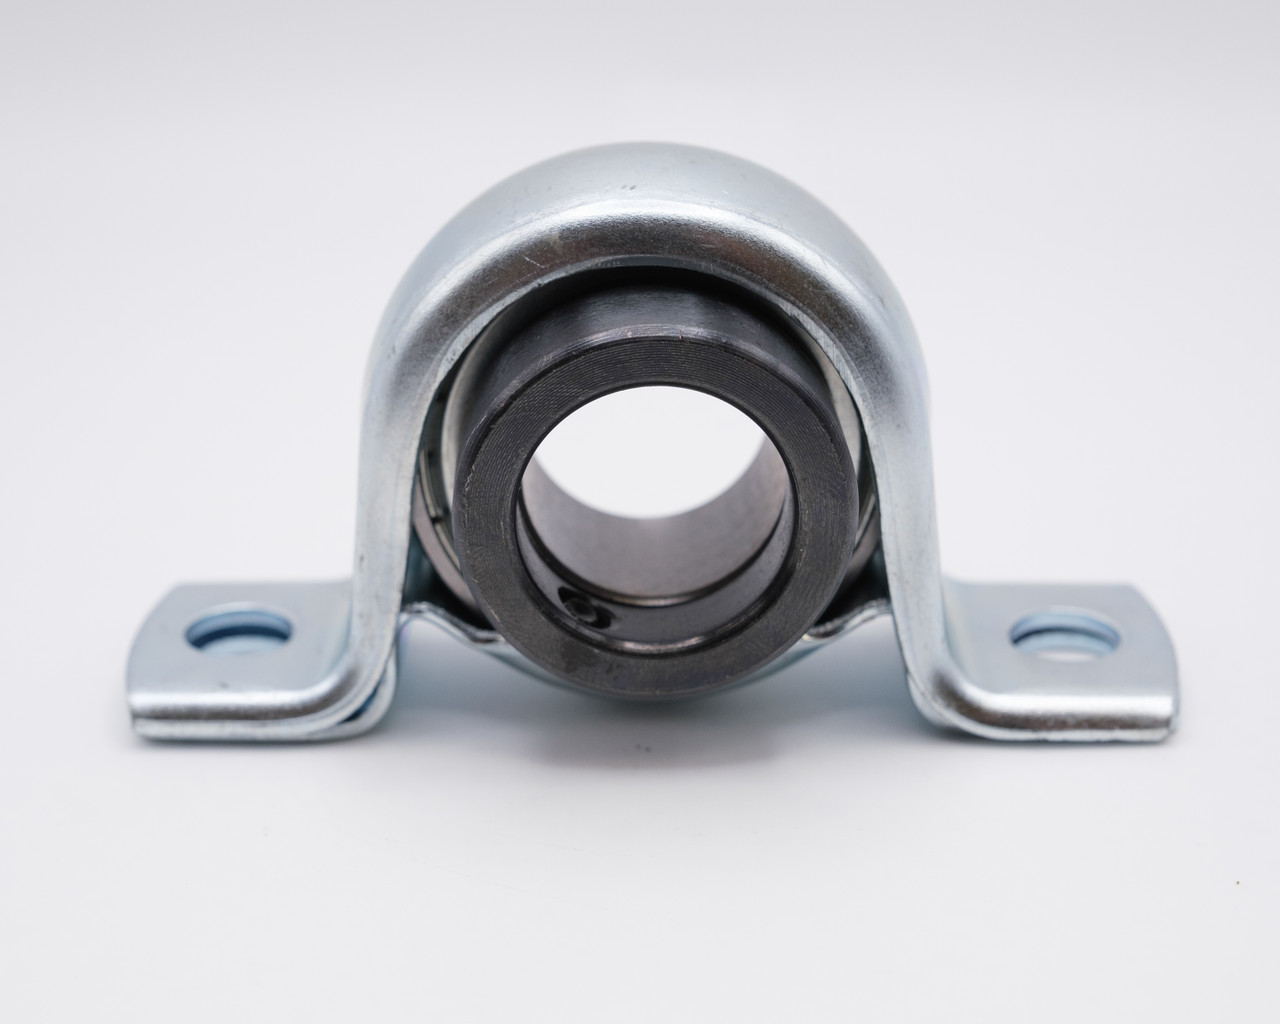 SAPP205-15 Press Steel Locking Collar Pillow Block Bearing 15/16" Bore Front View